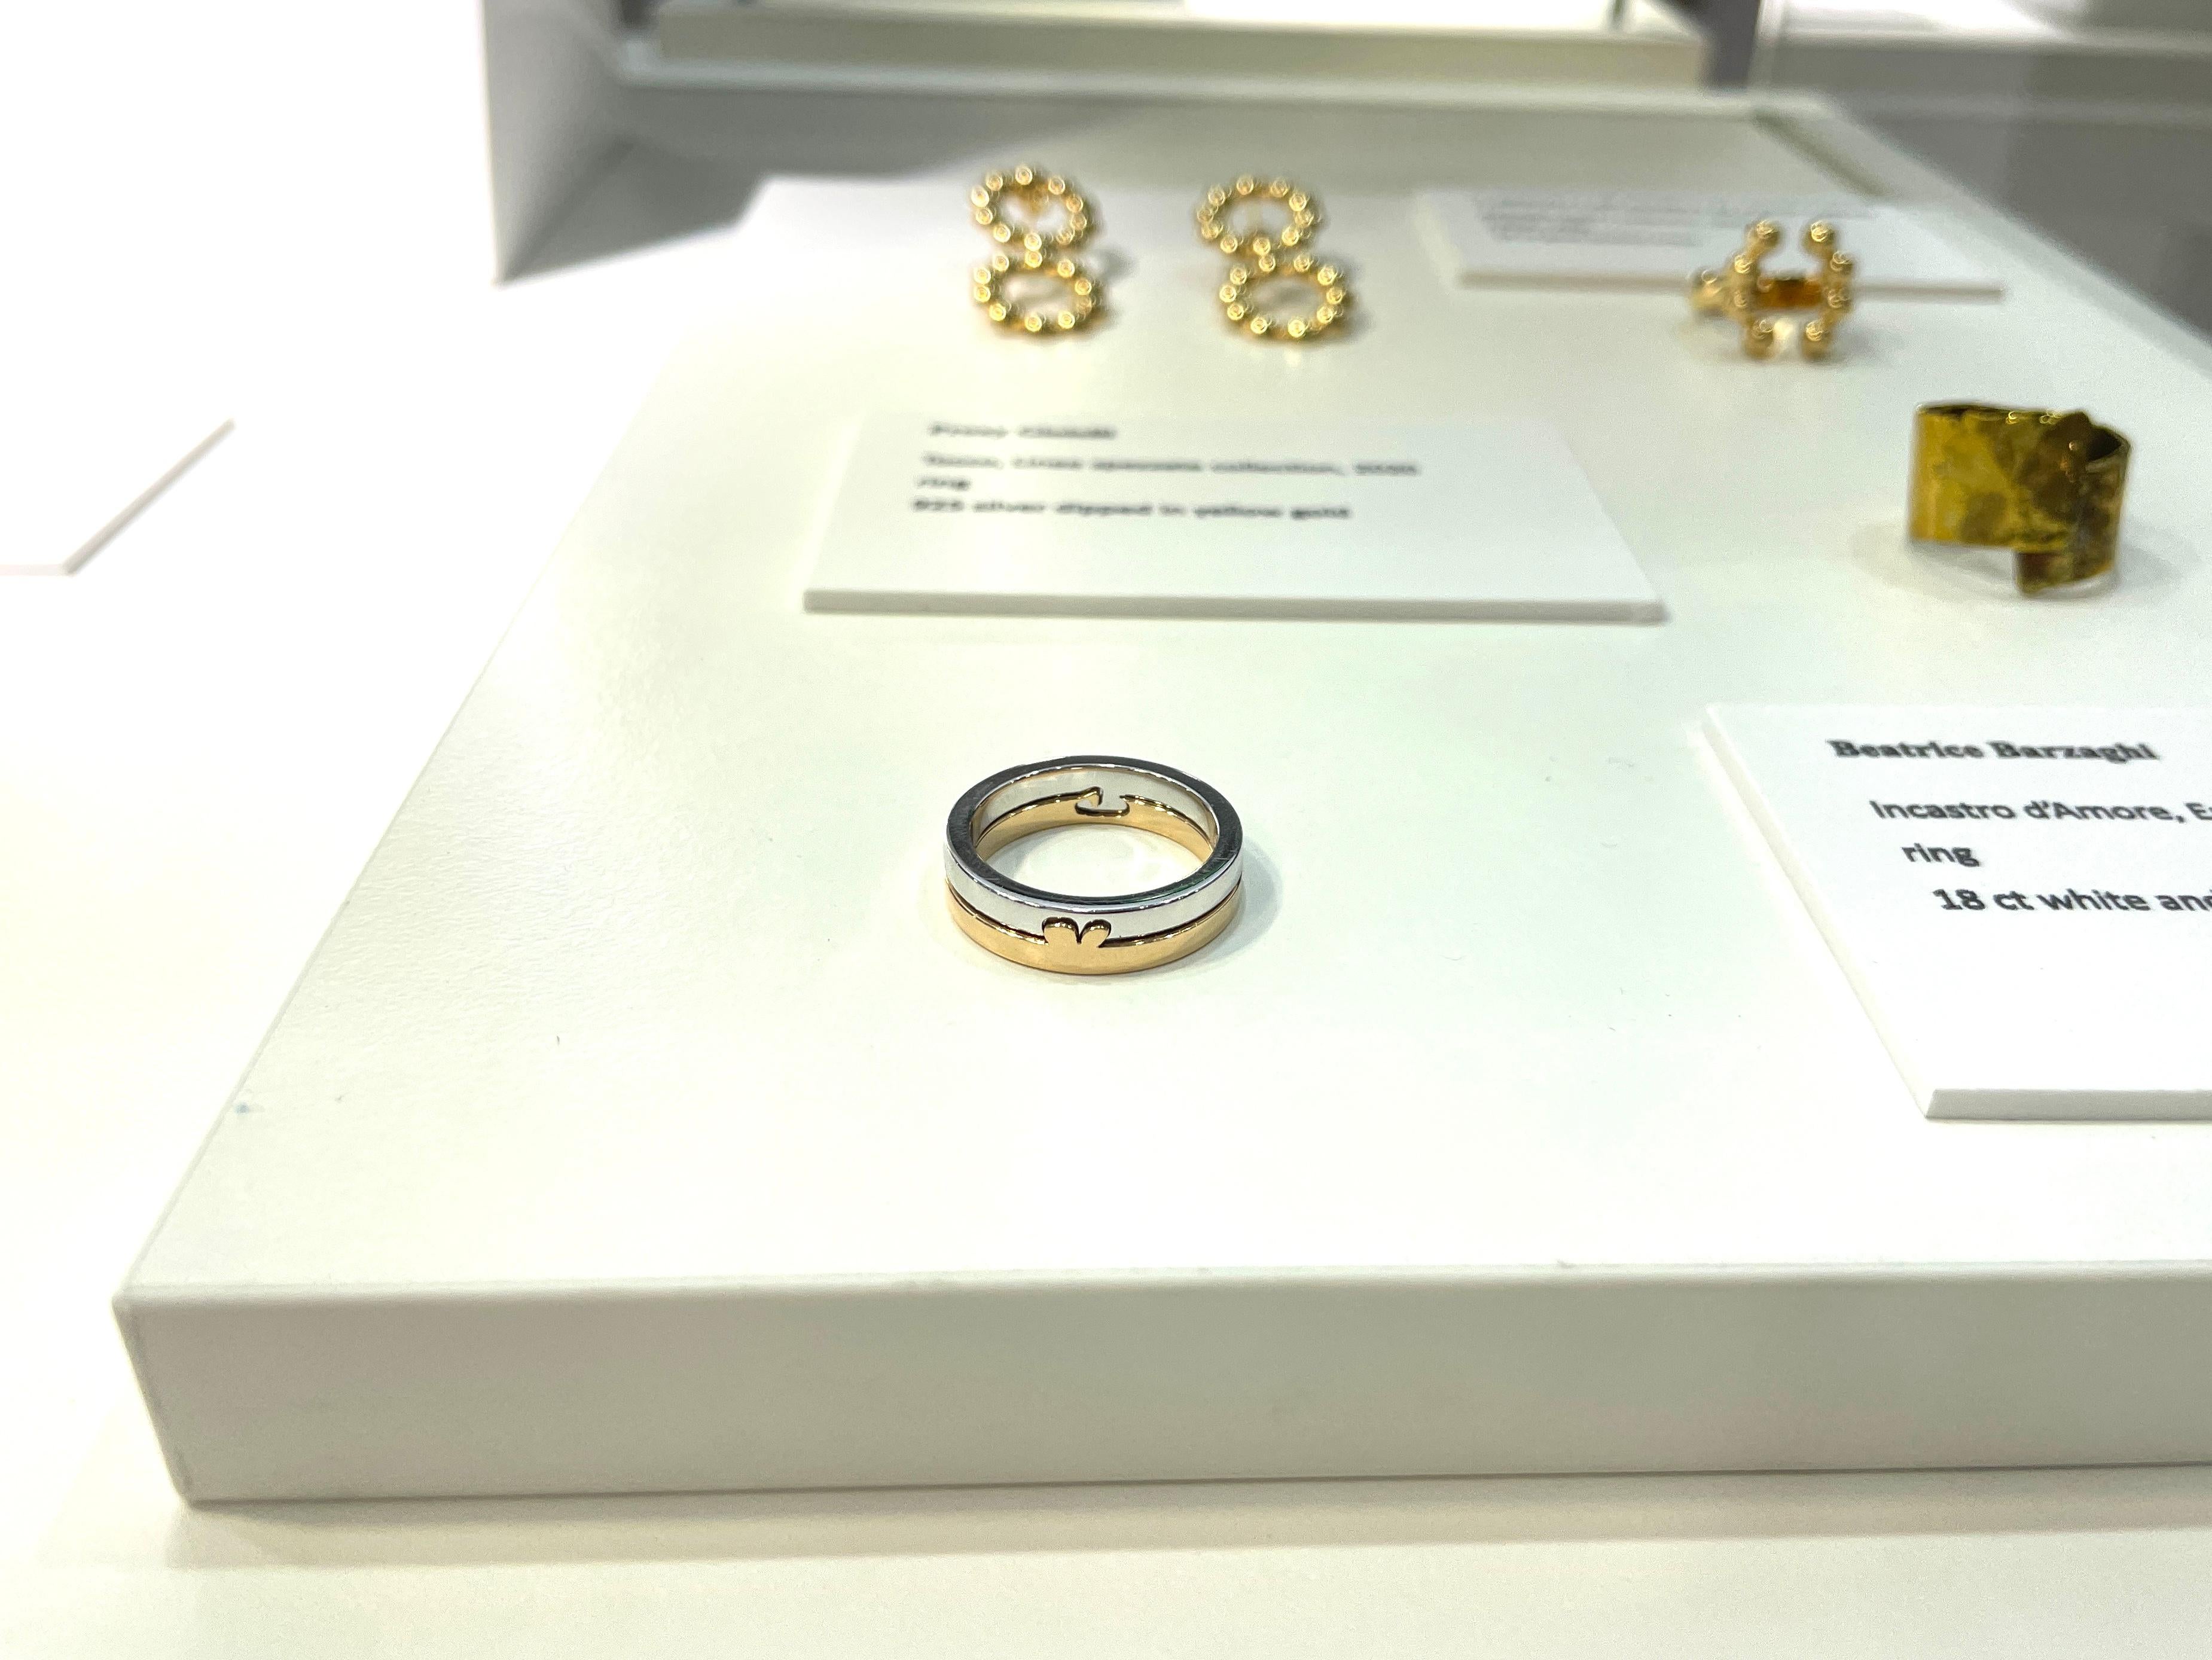 Bespoke 18k Gold Wedding Ring with Interlocking Initials Design For Sale 2